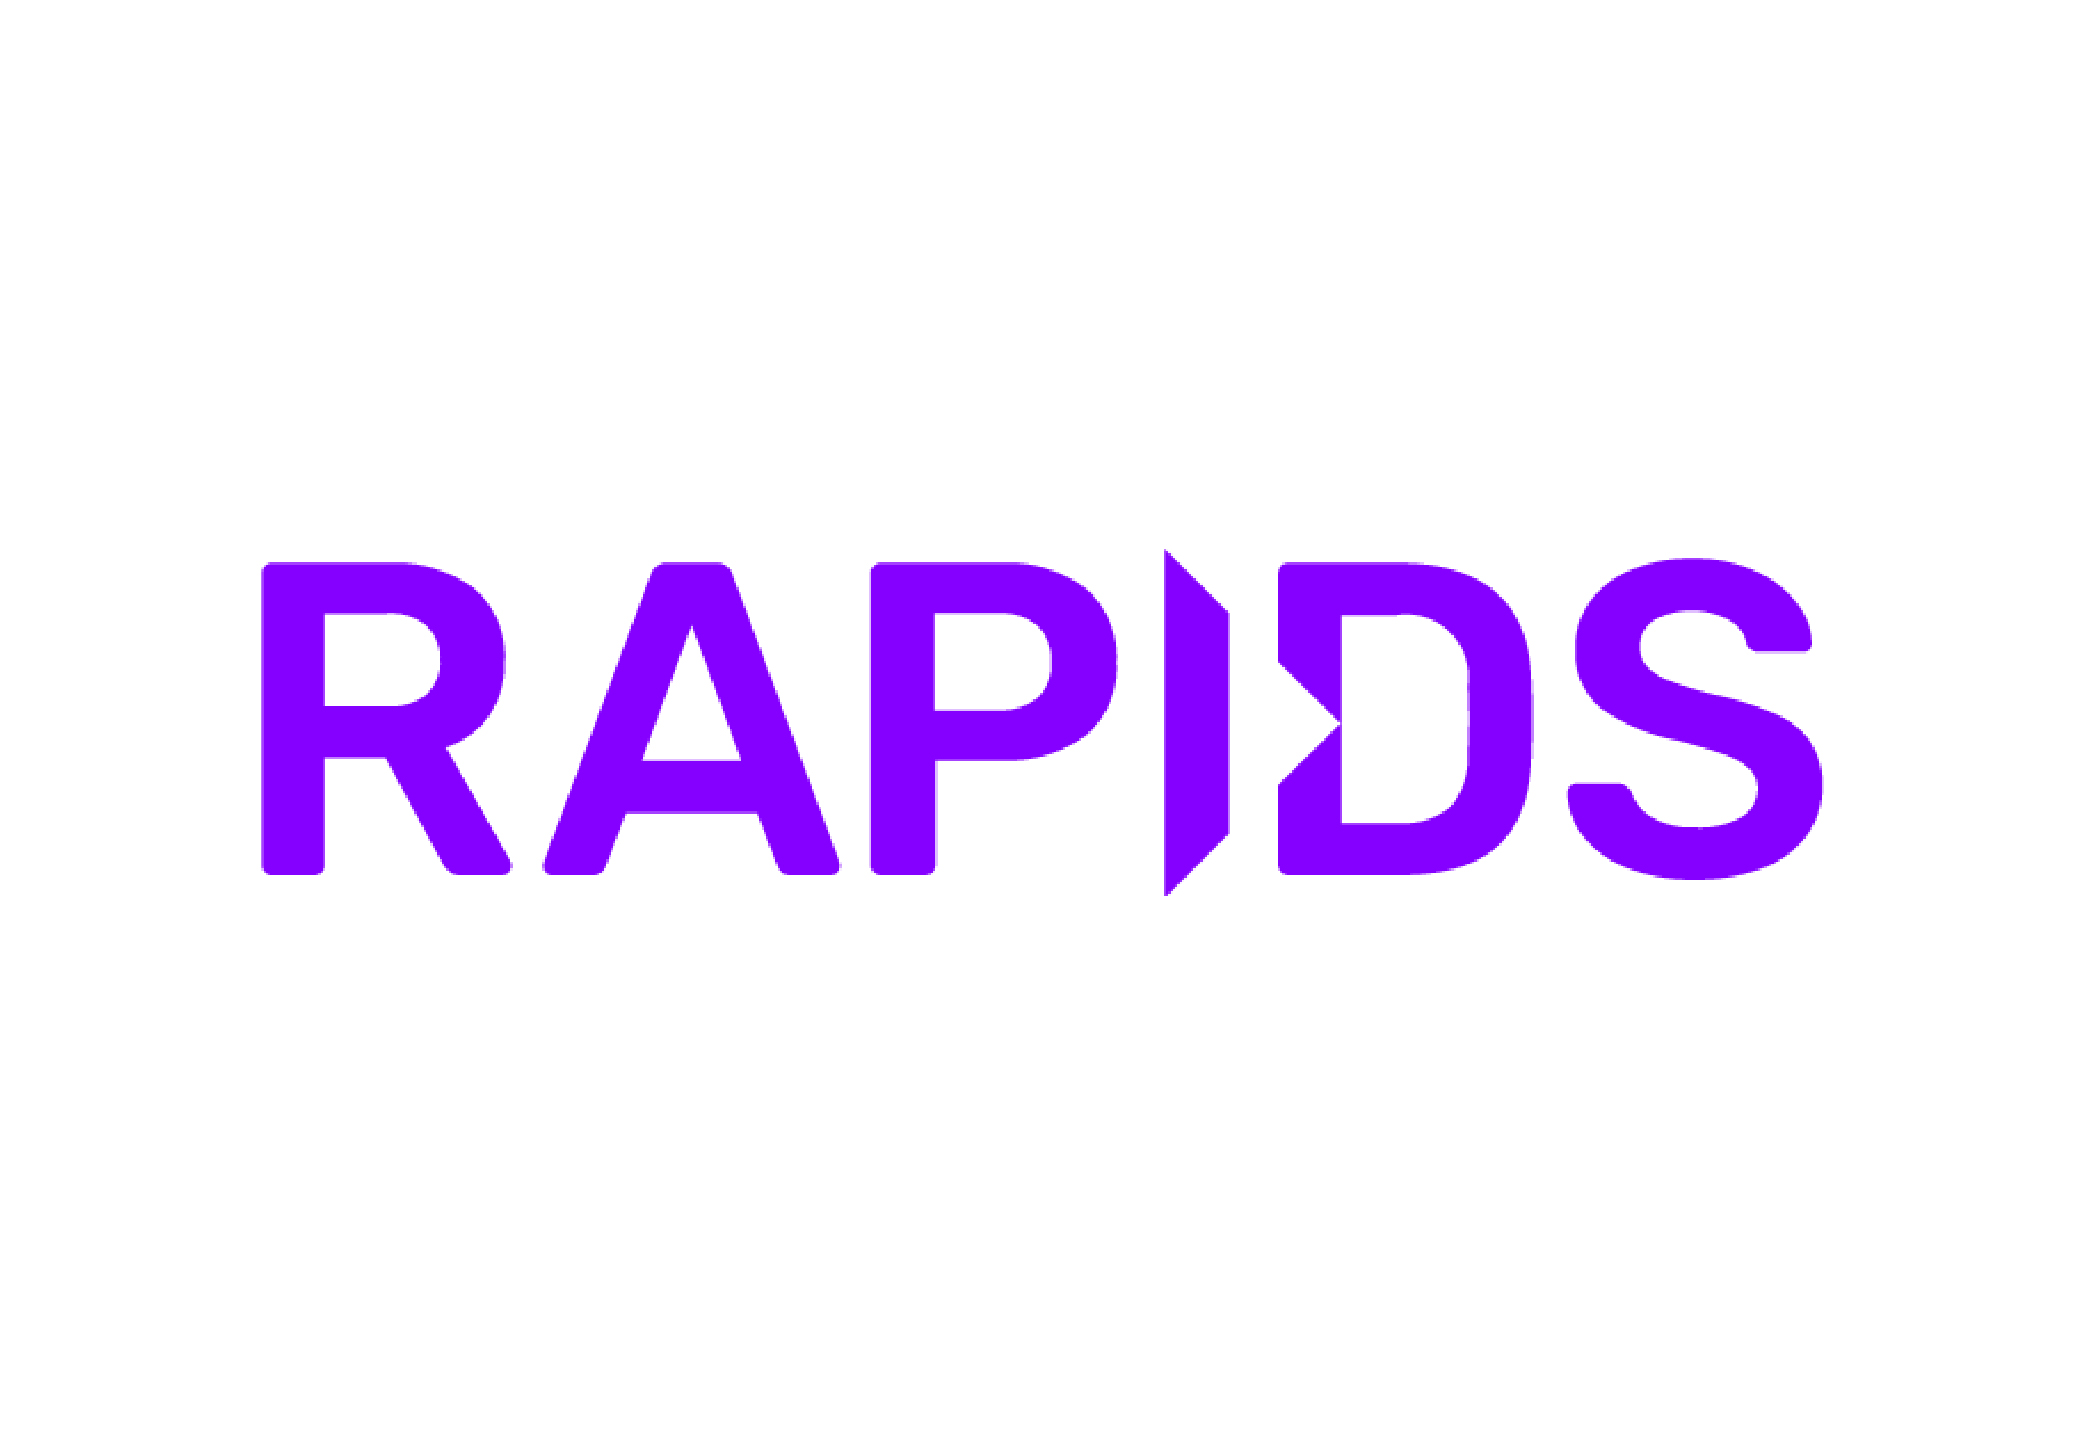 NVIDIA RAPIDS logo